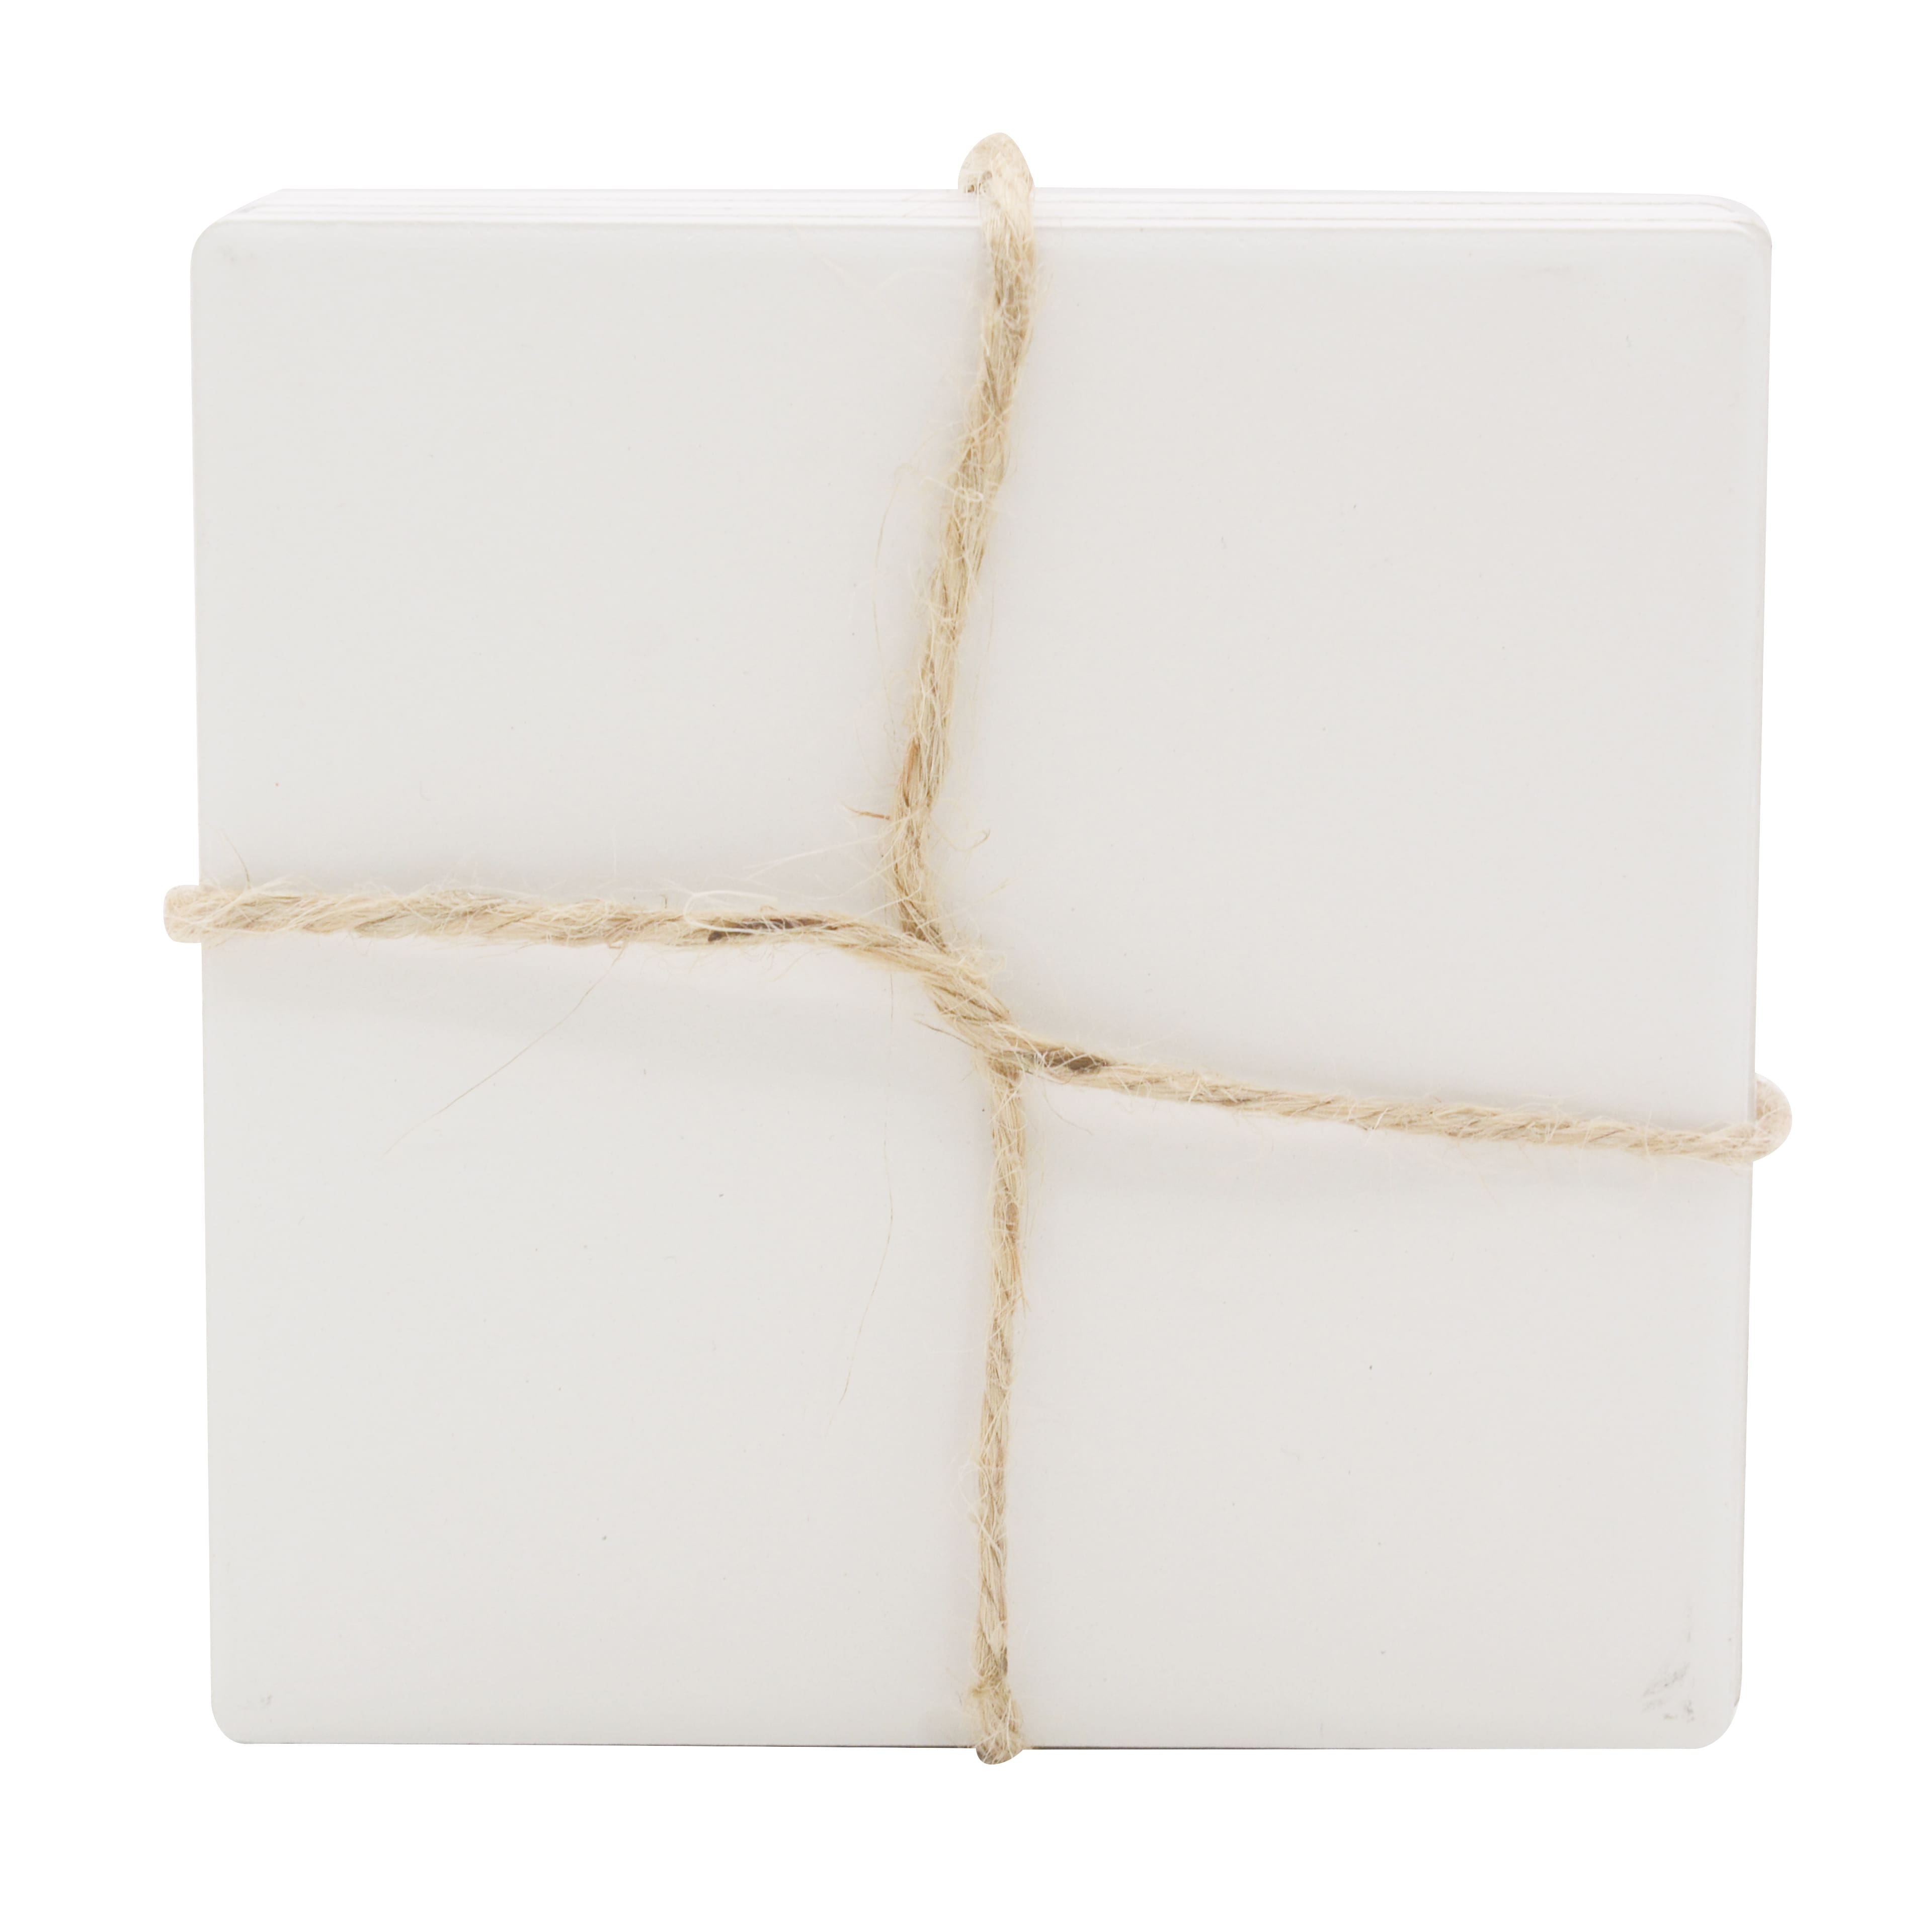 12 Packs: 4 ct. (48 total) White Ceramic Coasters by Make Market&#xAE;